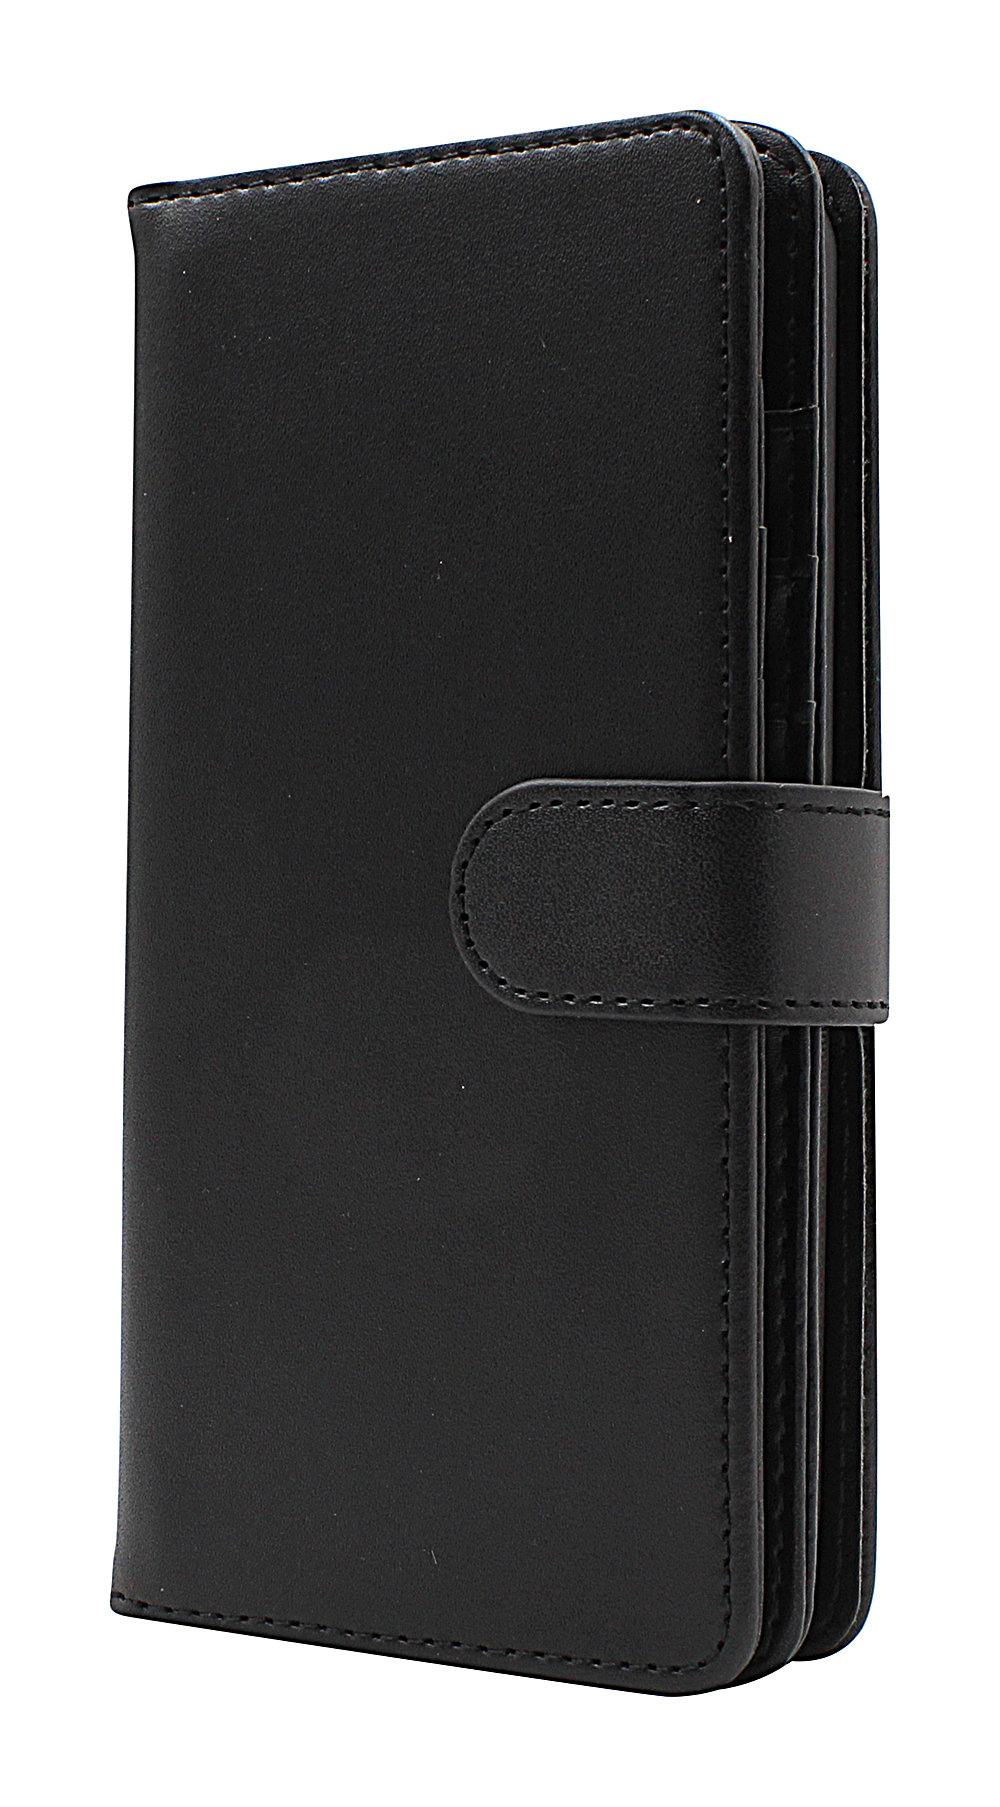 CoverInSkimblocker XL Magnet Fodral Samsung Galaxy S23 5G